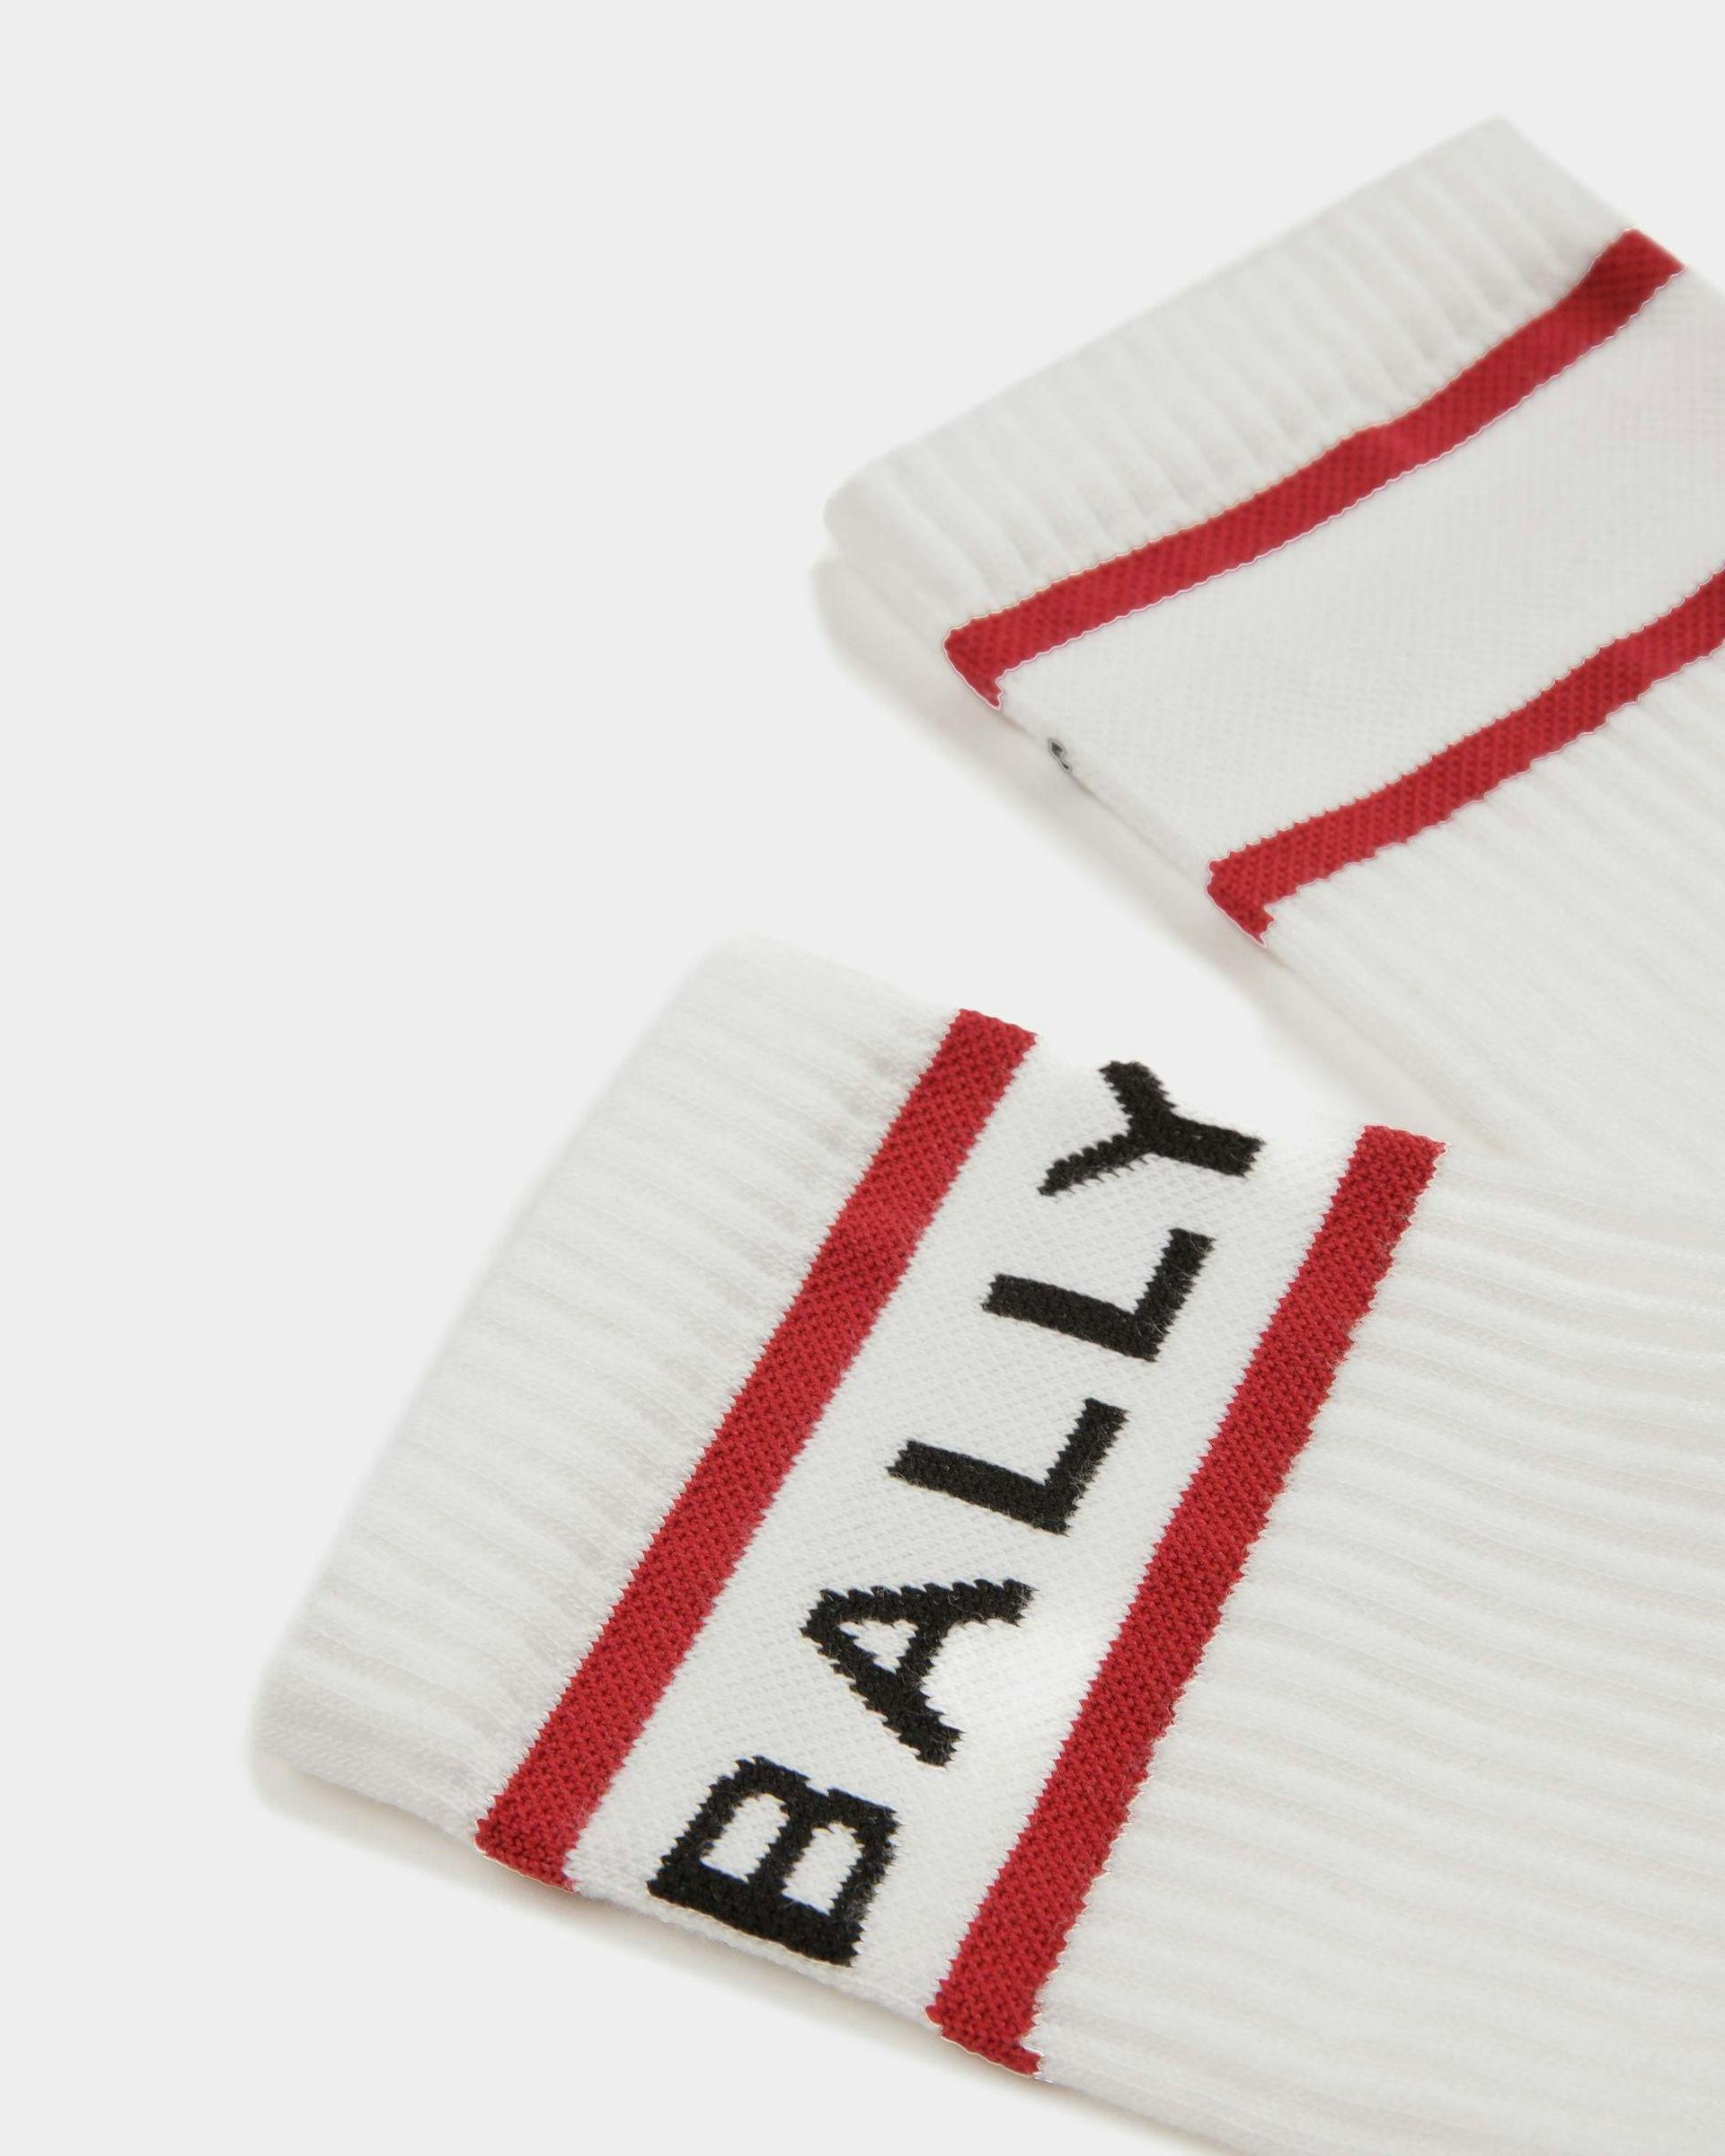 Calze Bally Stripe In Bianco E Rubino Scuro - Uomo - Bally - 02